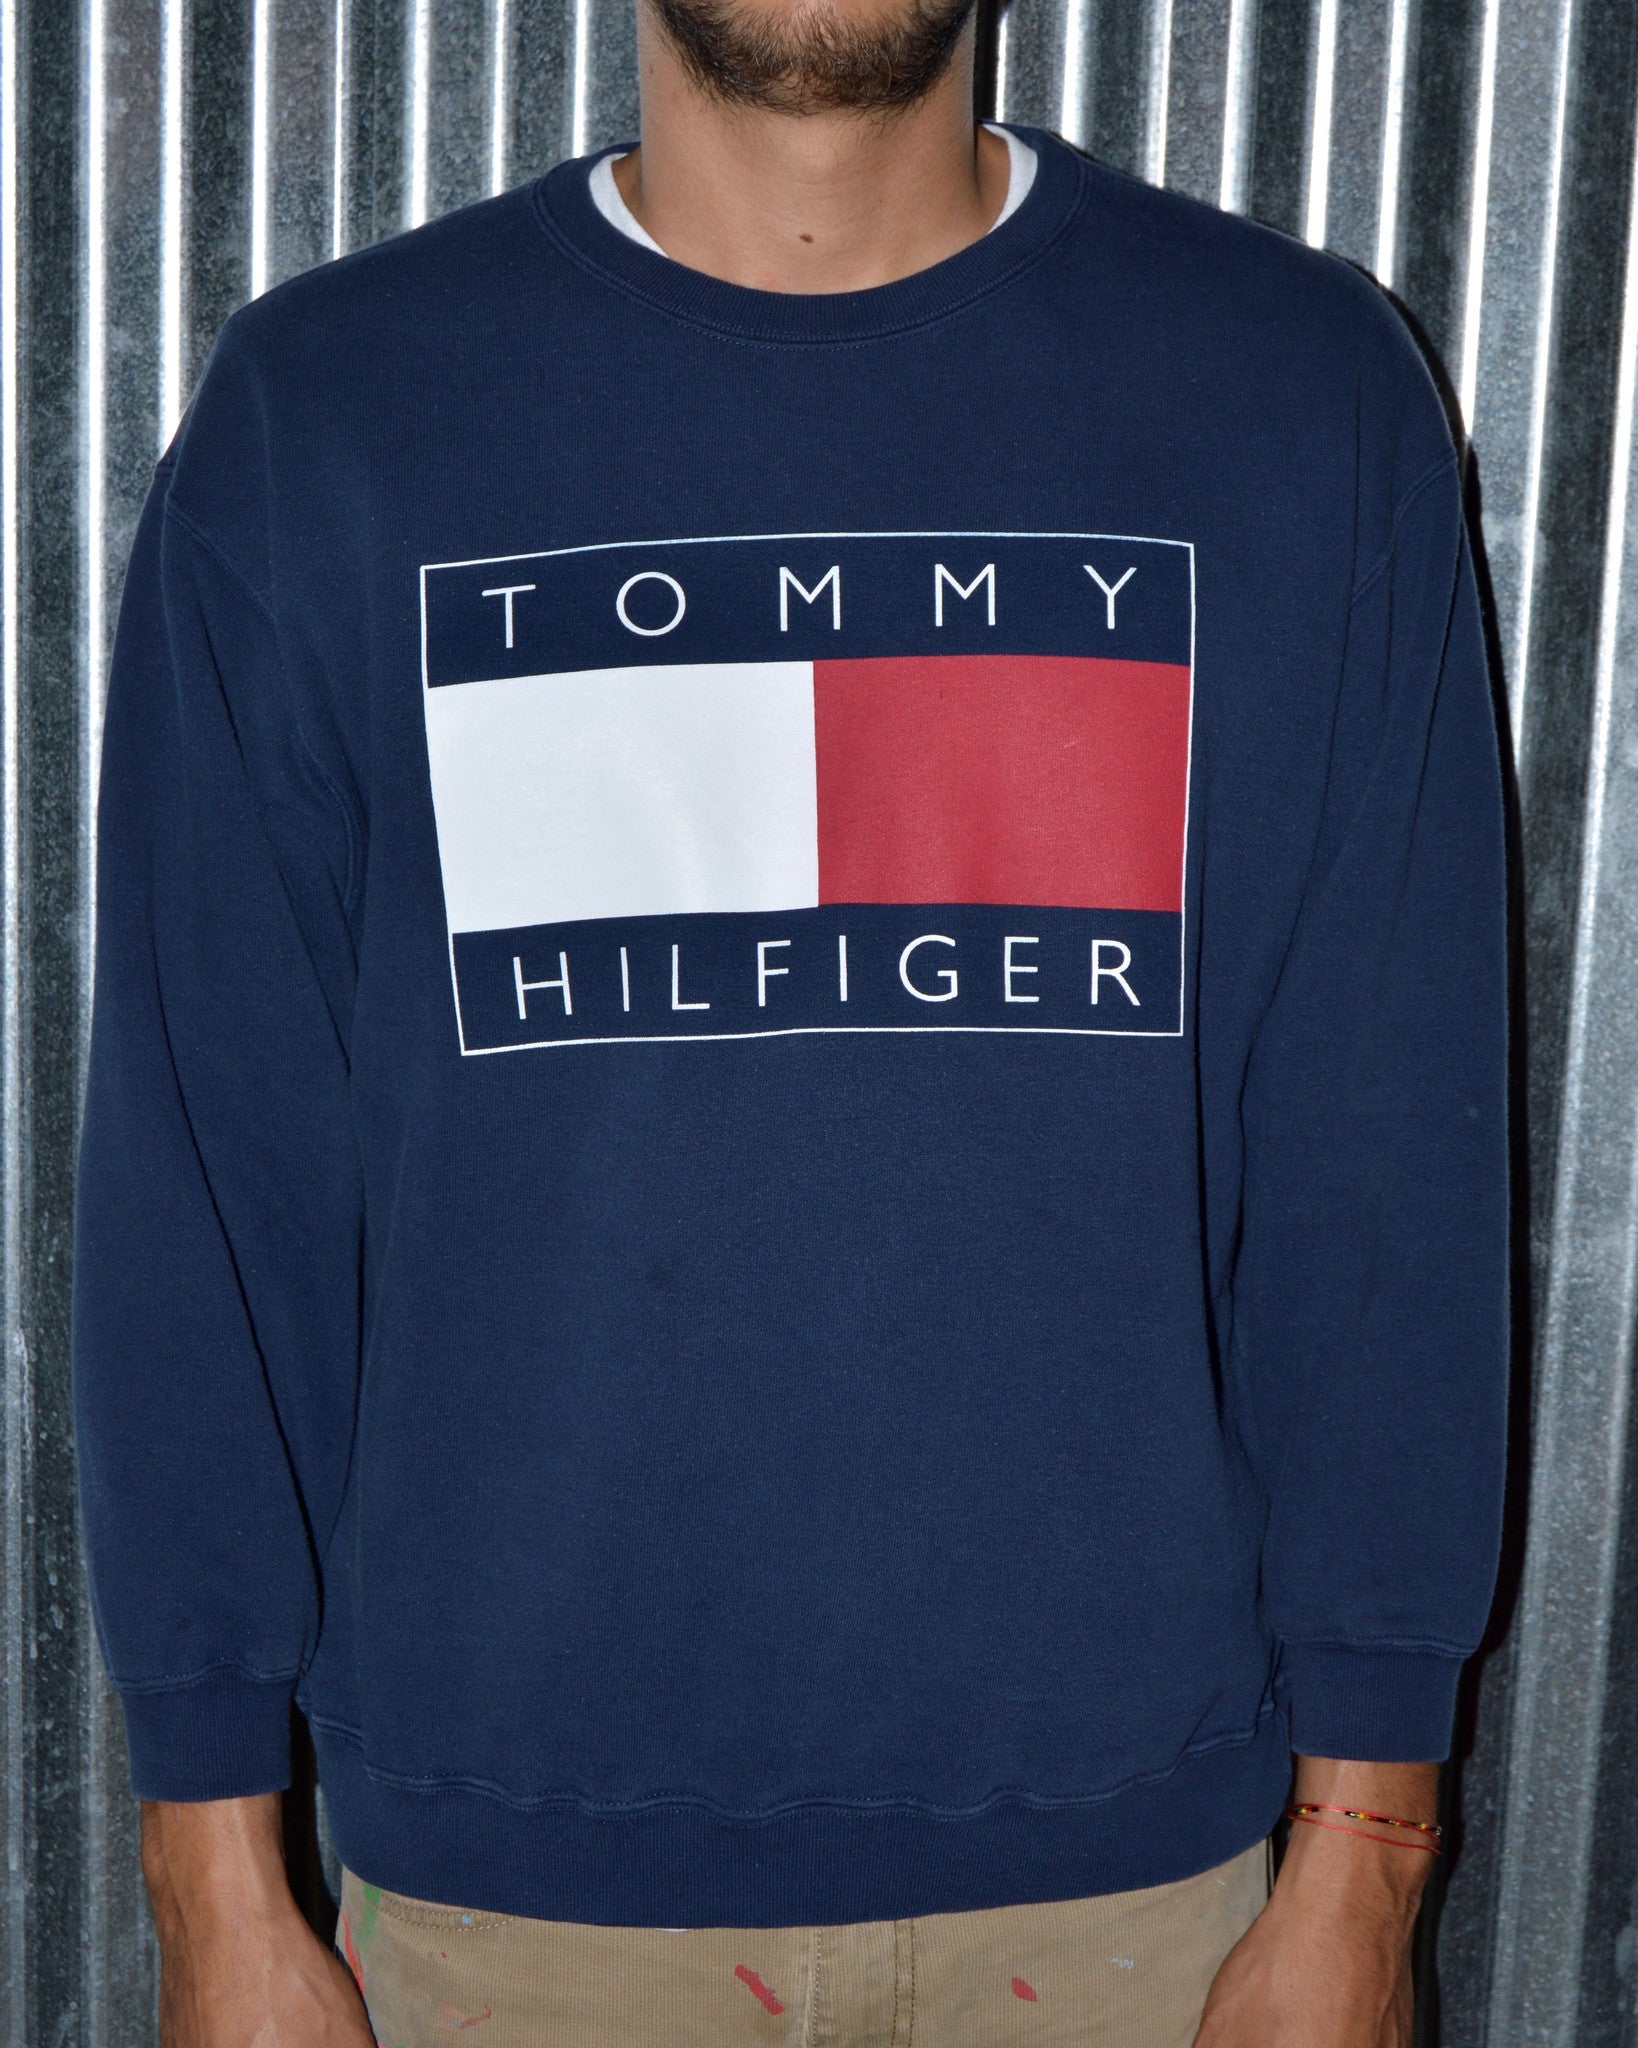 Vintage 90's Tommy Hilfiger Yellow Sweatshirt Xlarge Hilfiger Denim Printed  Spell Out Jumper Casual Tommy Hilfiger Crewneck Sweater Size XL - Etsy